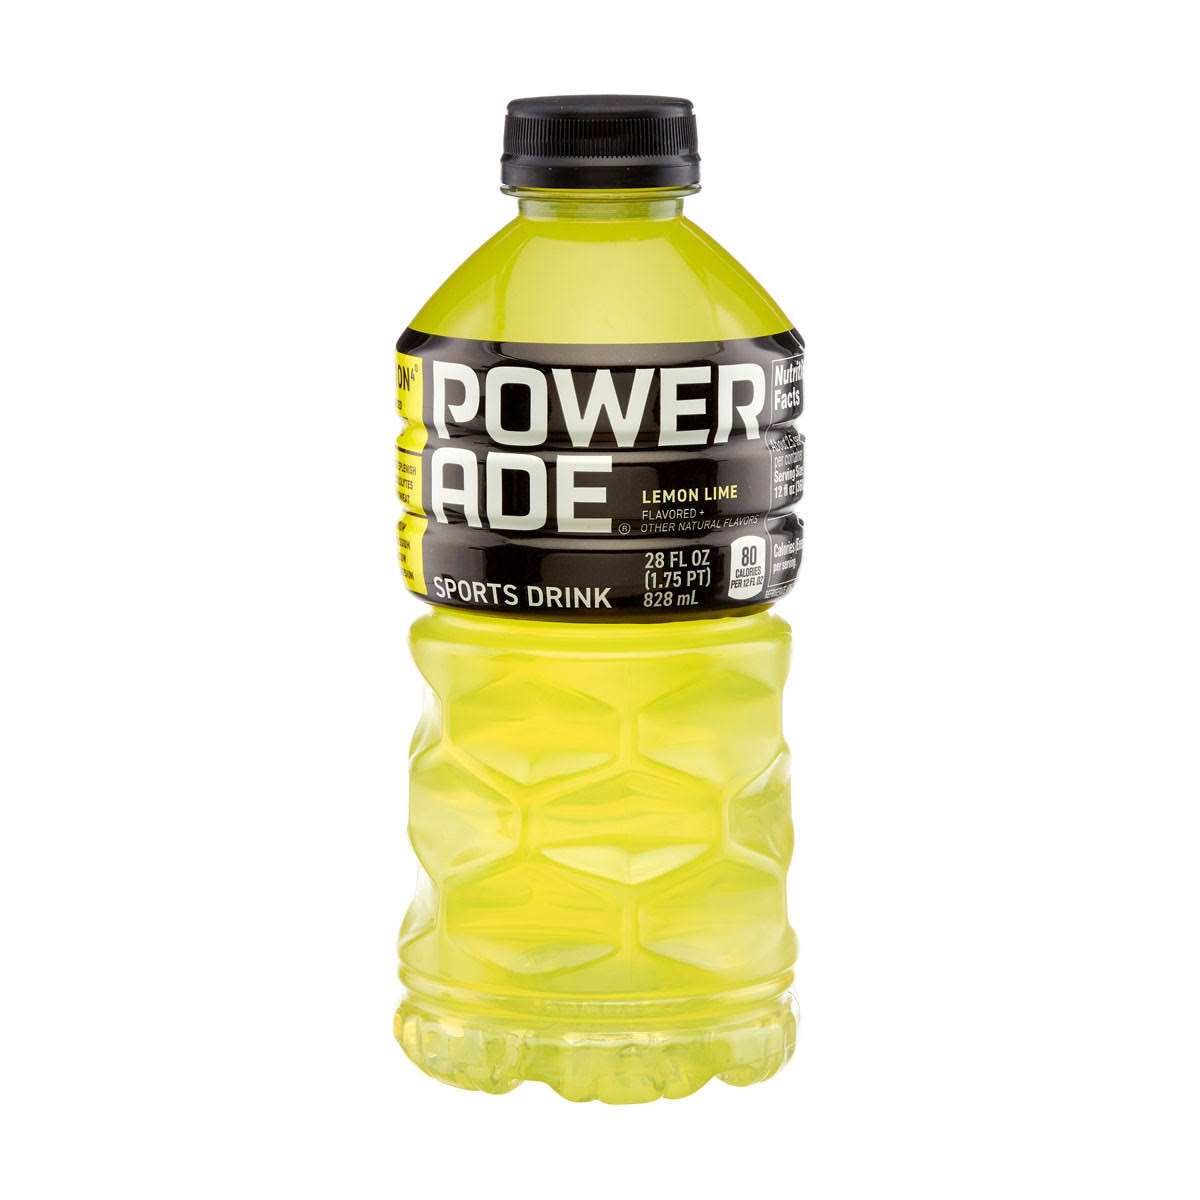 Power Ade Sports Drink, Lemon Lime - 28 fl oz